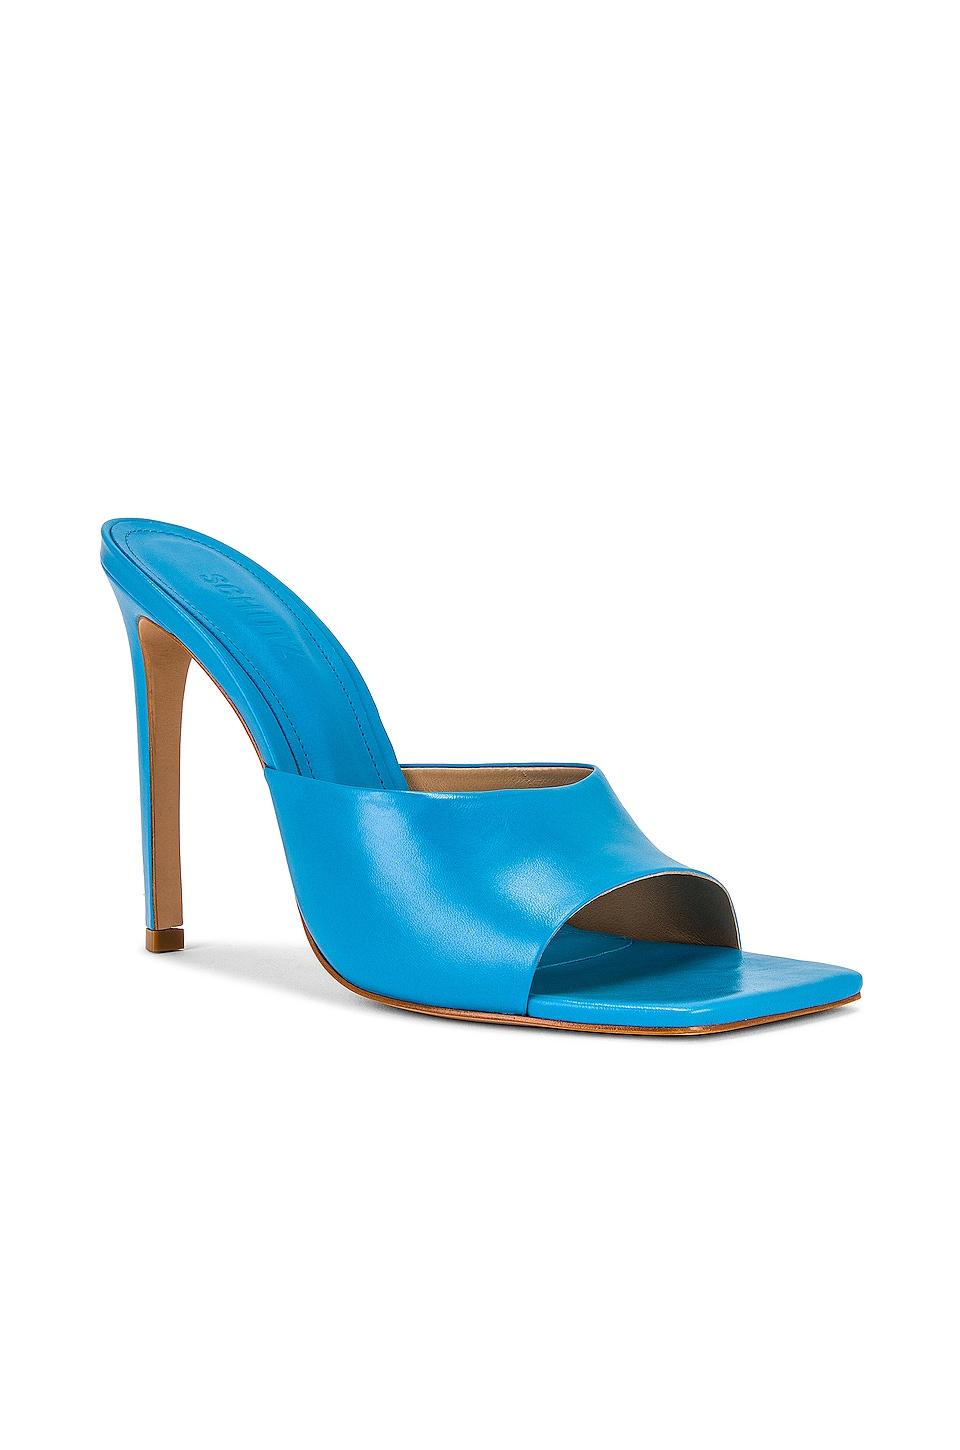 Schutz Leather Kate Heel in Blue | Lyst